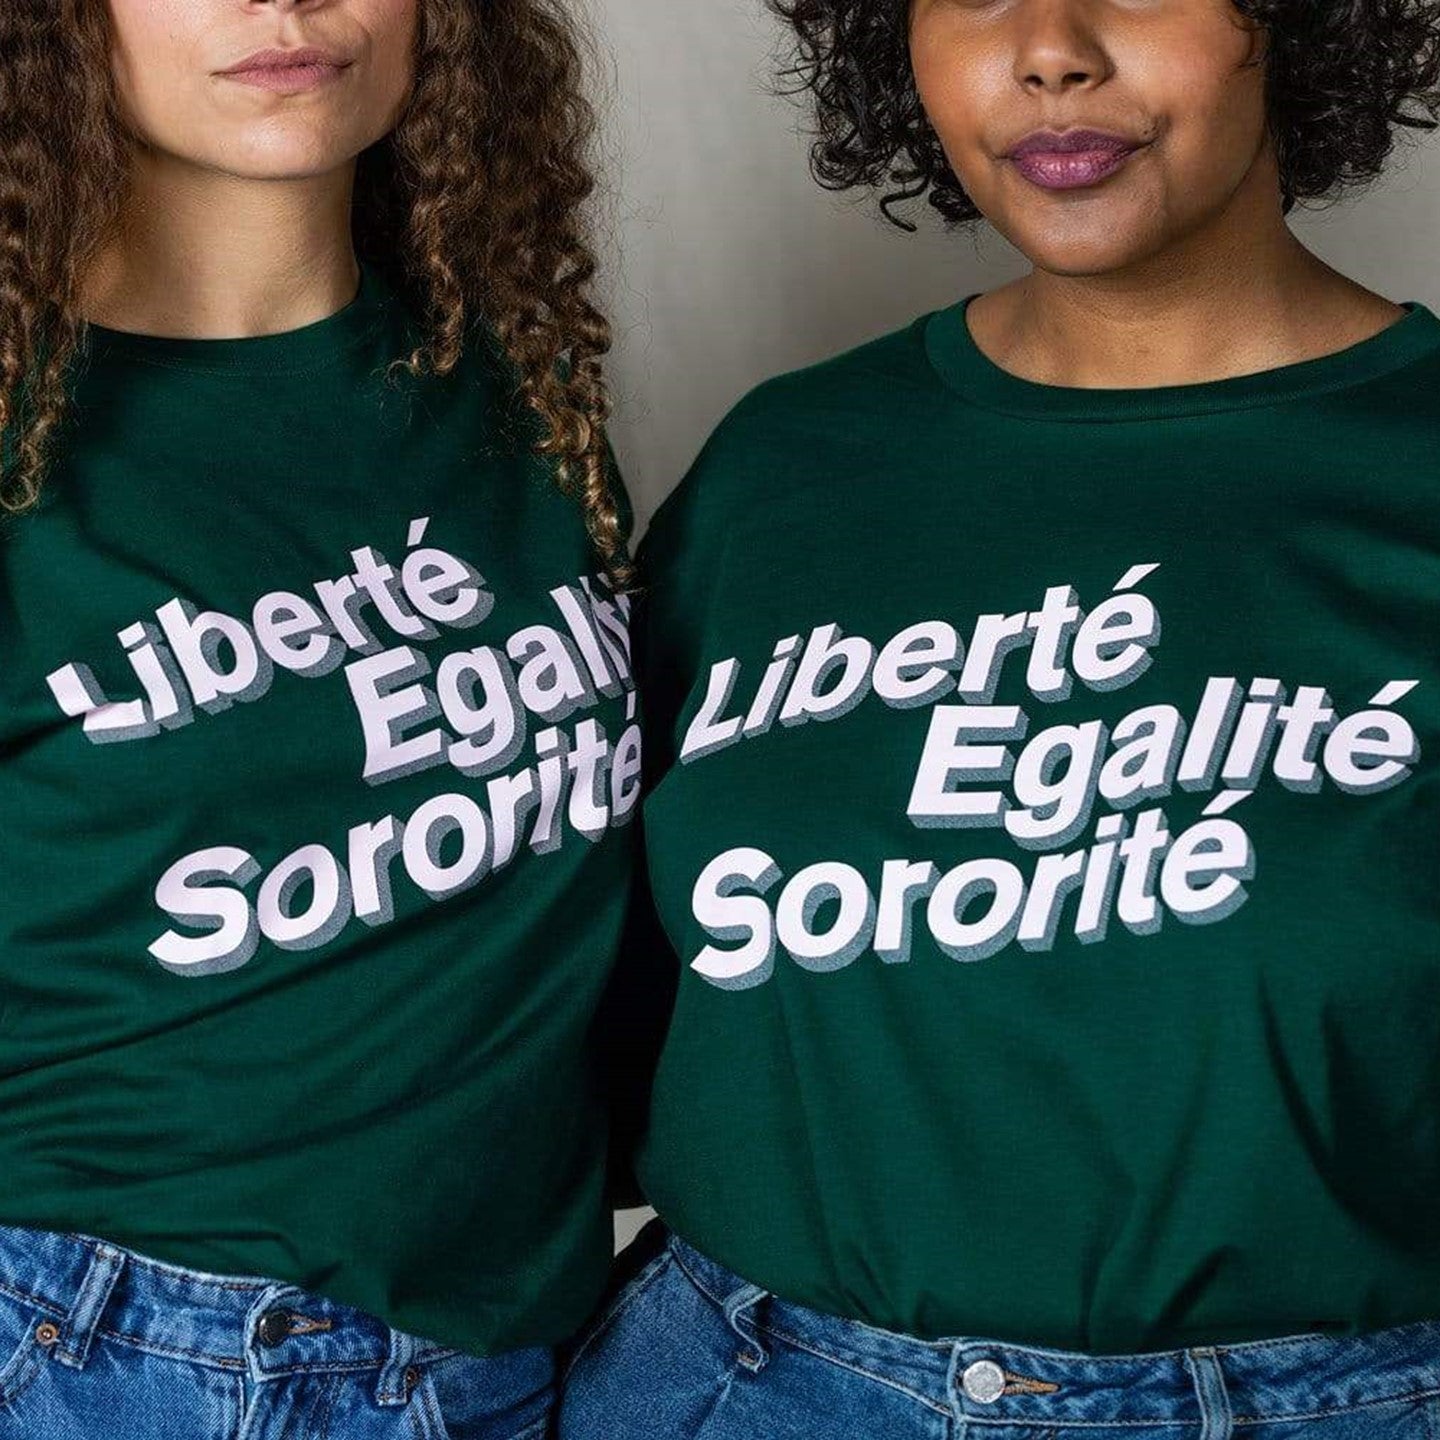 Liberté, Égalité, and Timothée | Essential T-Shirt